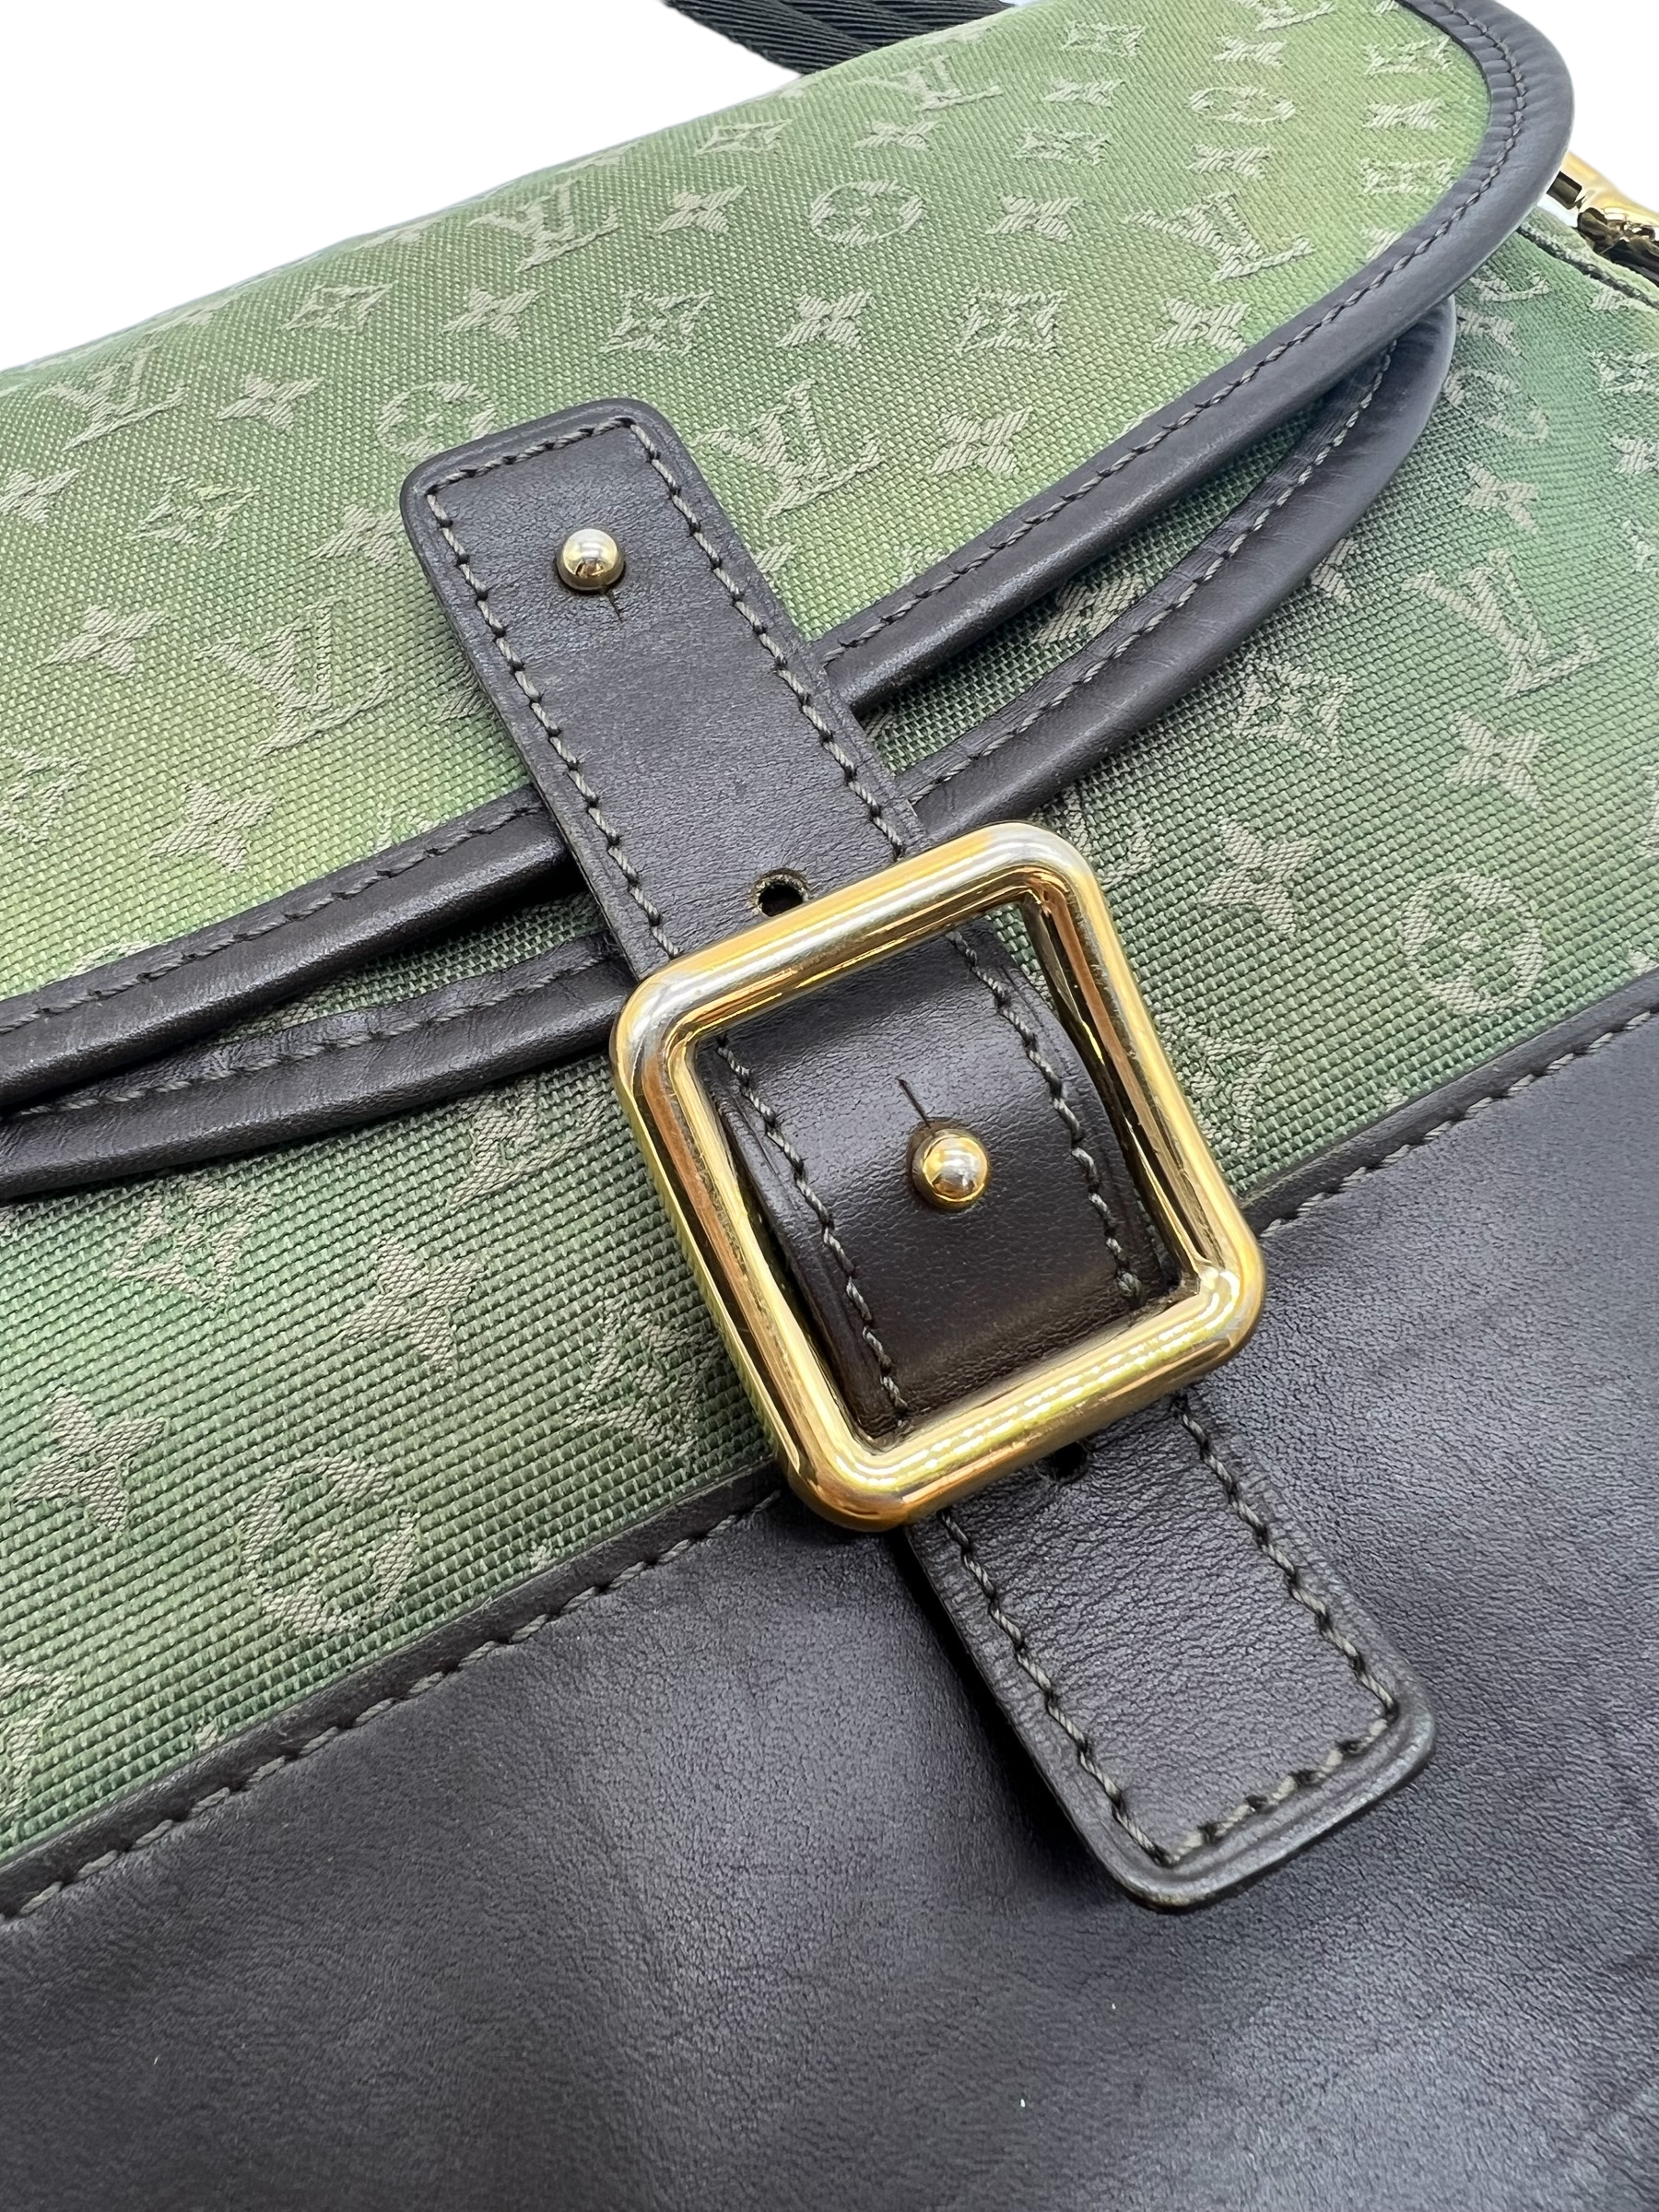 Louis Vuitton Beige/Tan Mini Lin Canvas Berangere Crossbody Bag